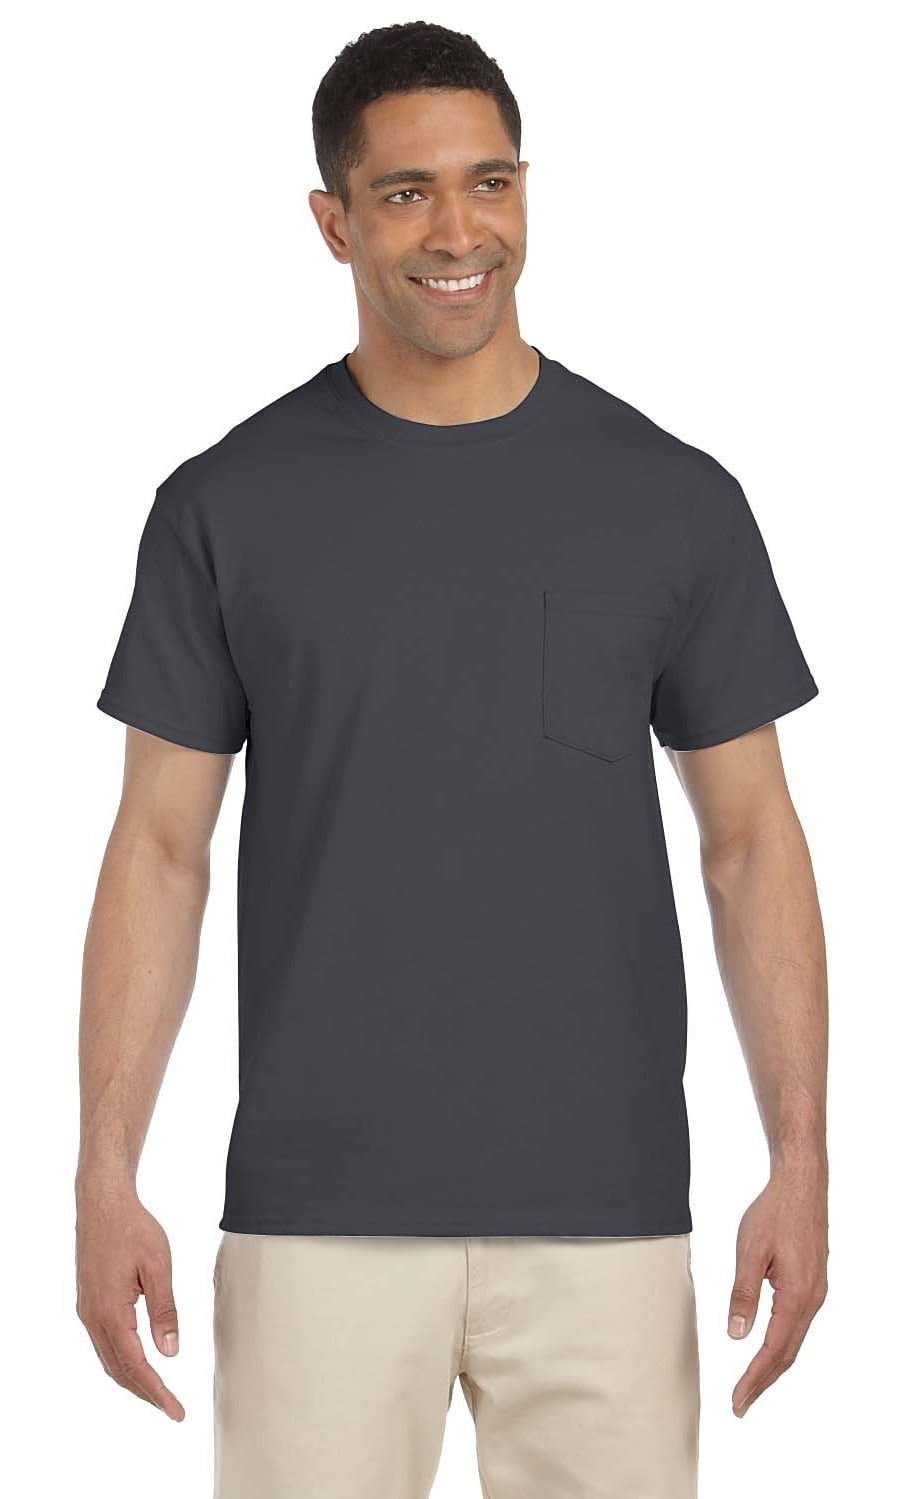 ATOMIC Logo S-5XL Cotton Blend Short Sleeves Black T-Shirt